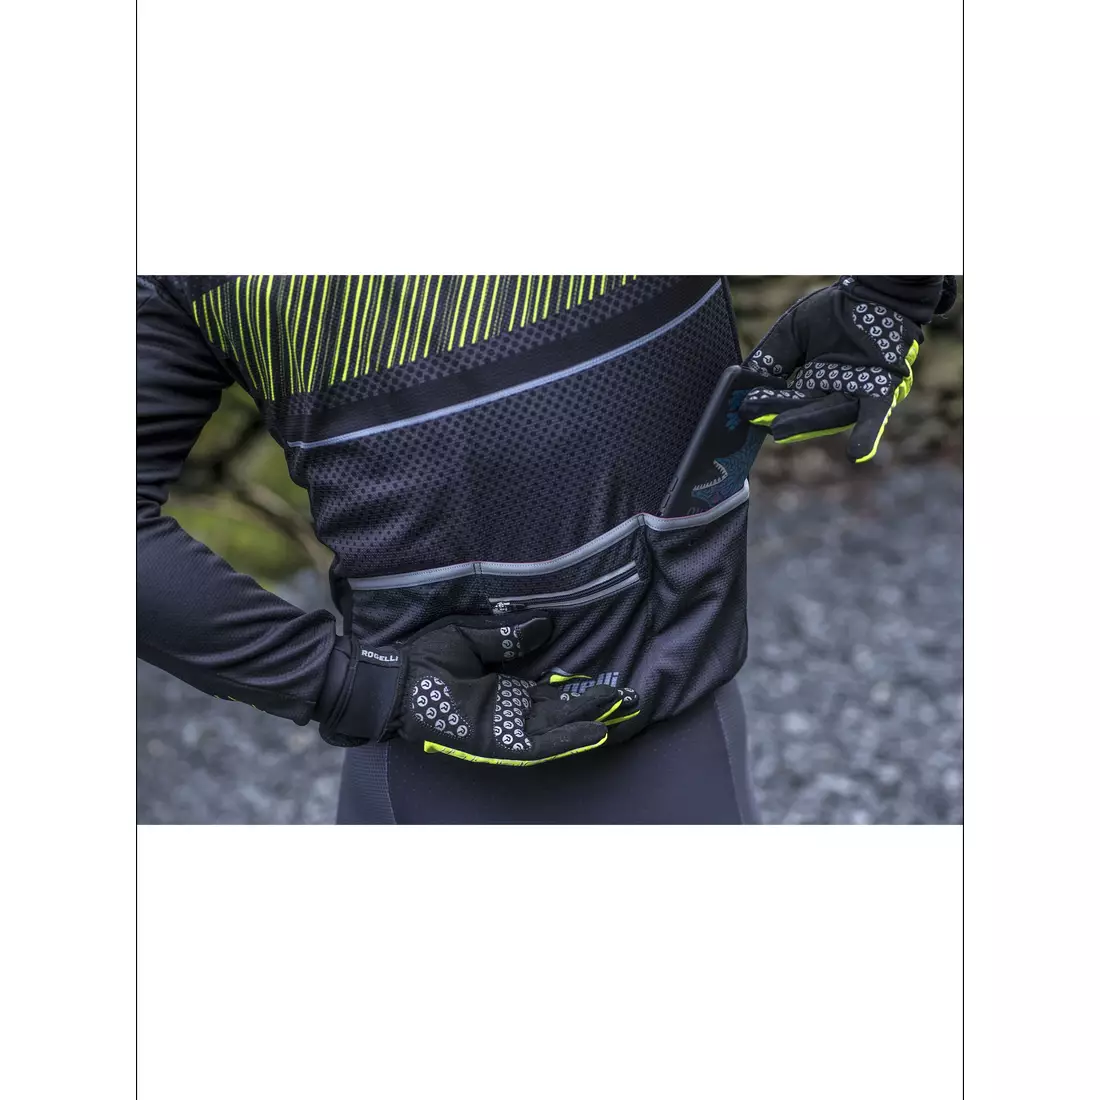 ROGELLI RITMO light insulated bicycle jacket, black-fluor yellow